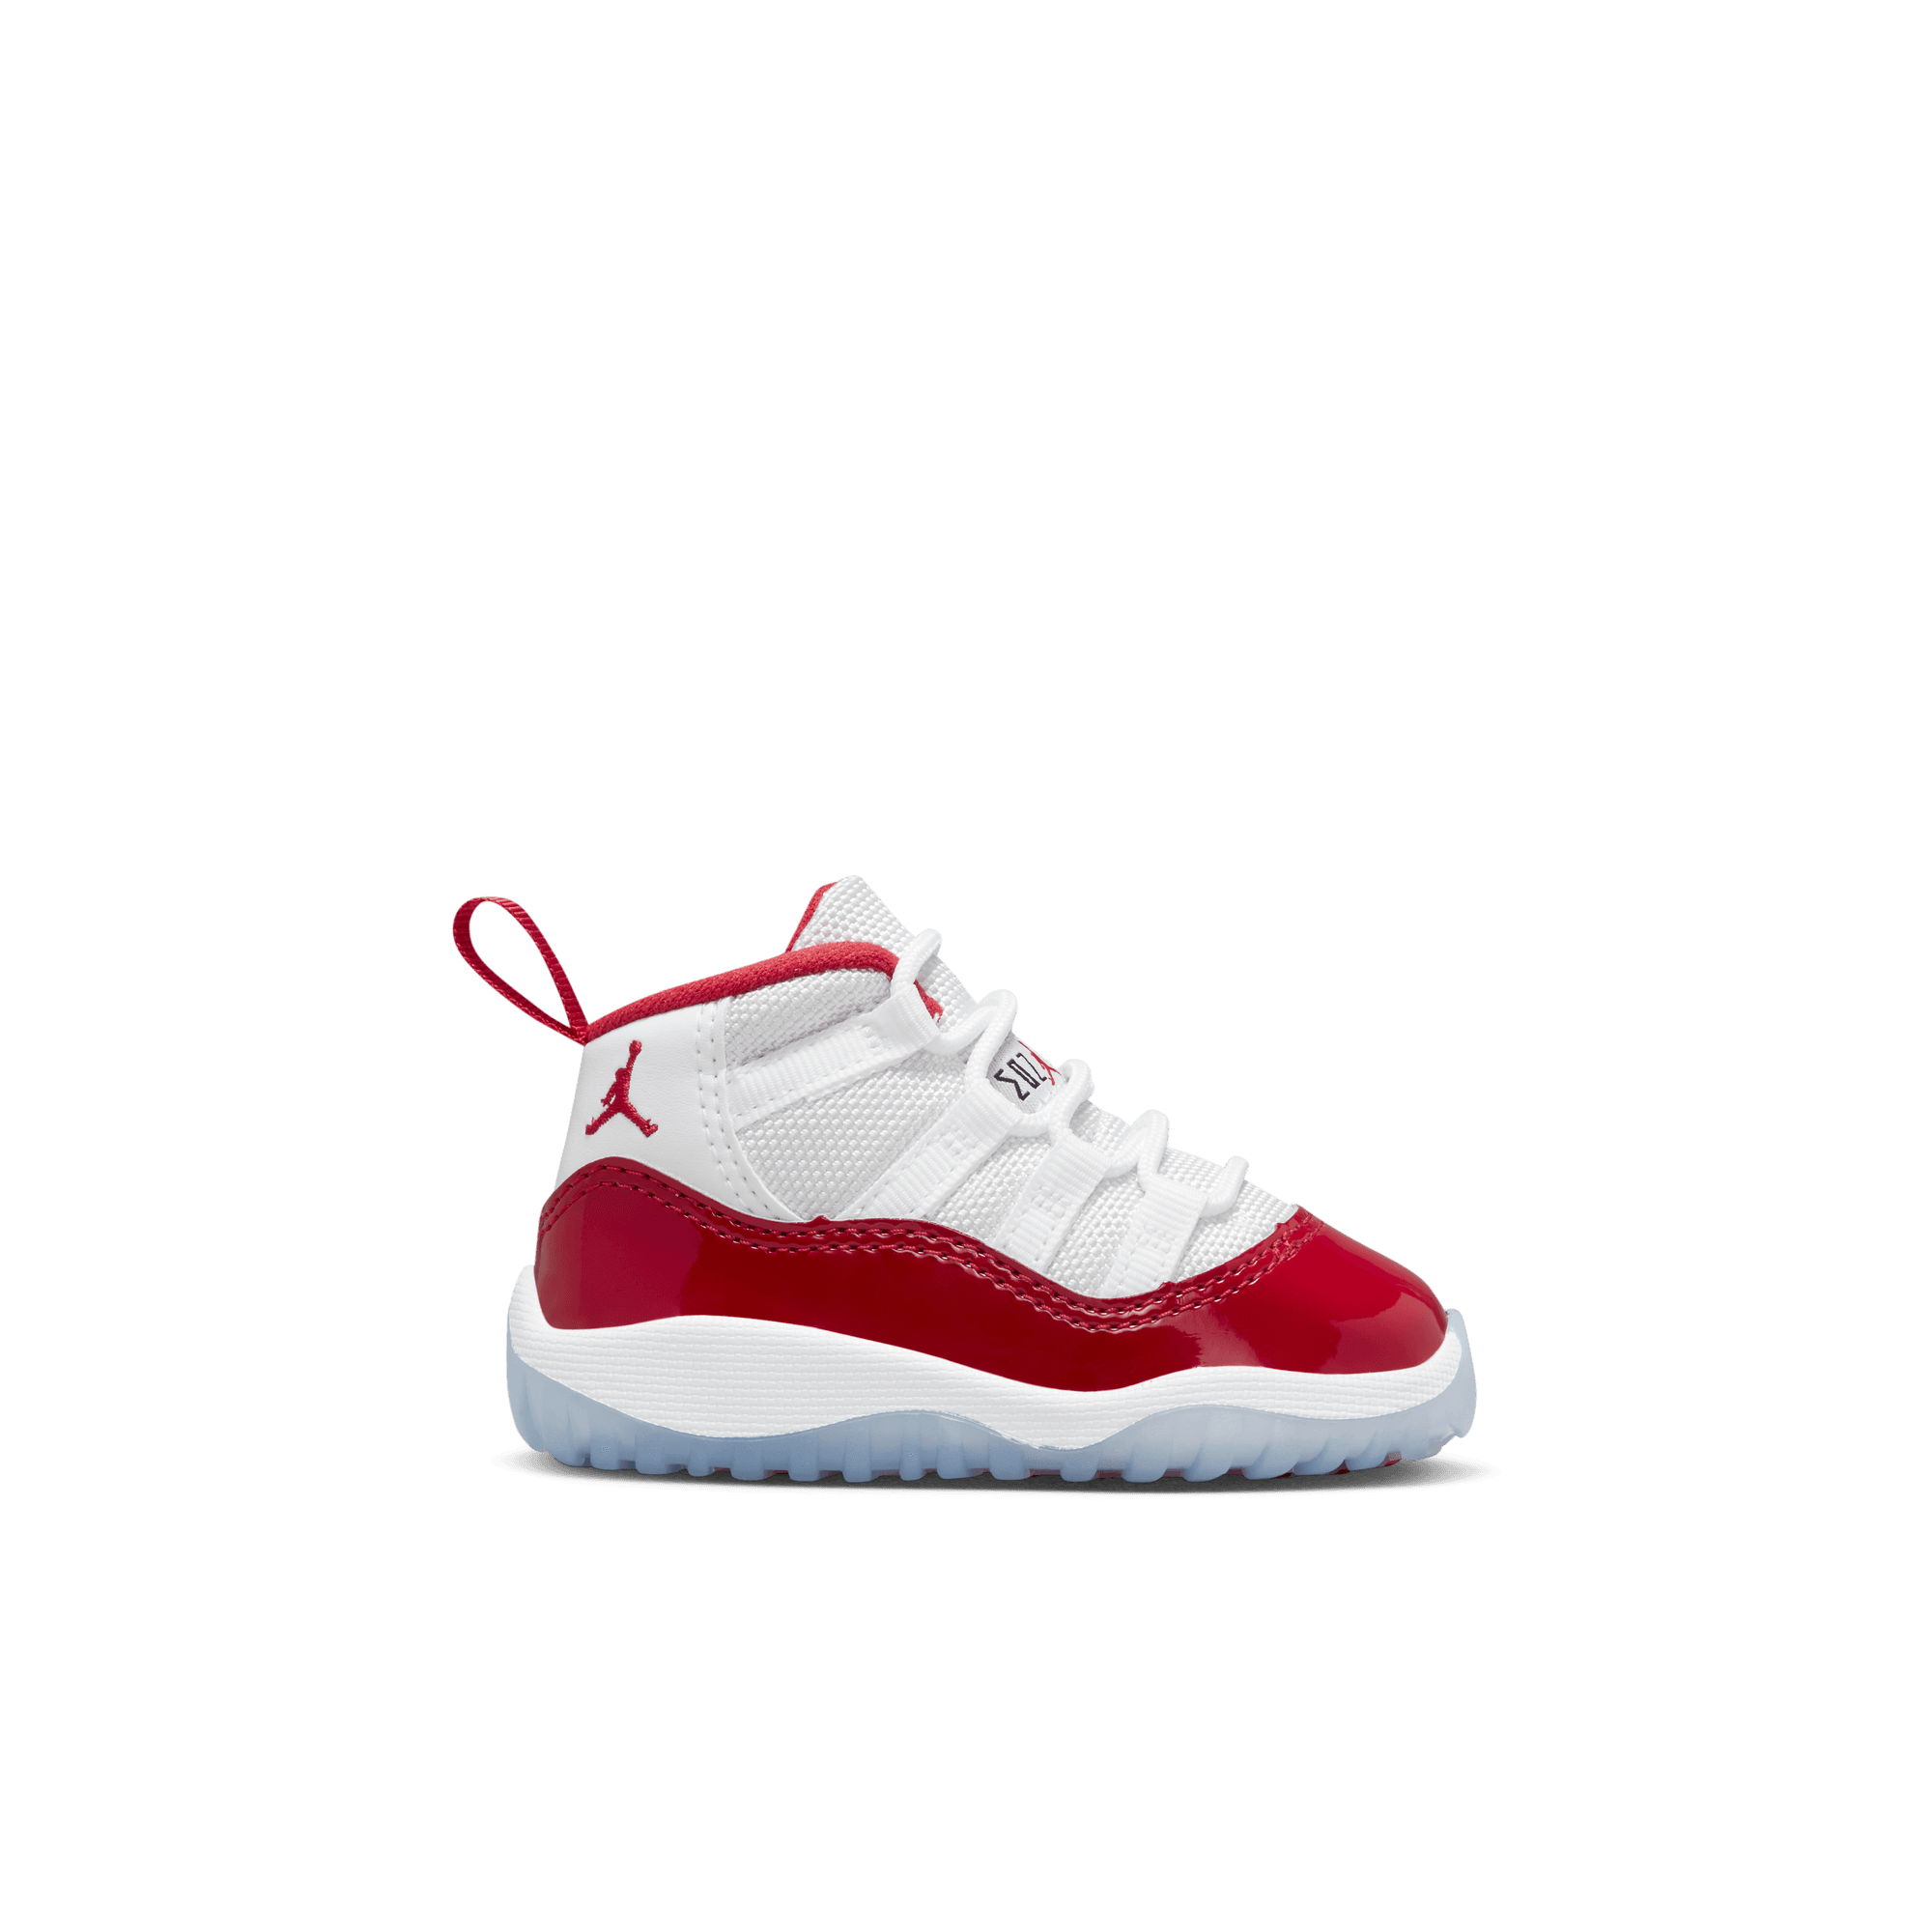 Air Jordan 11 Cherry - Toddler's - GBNY